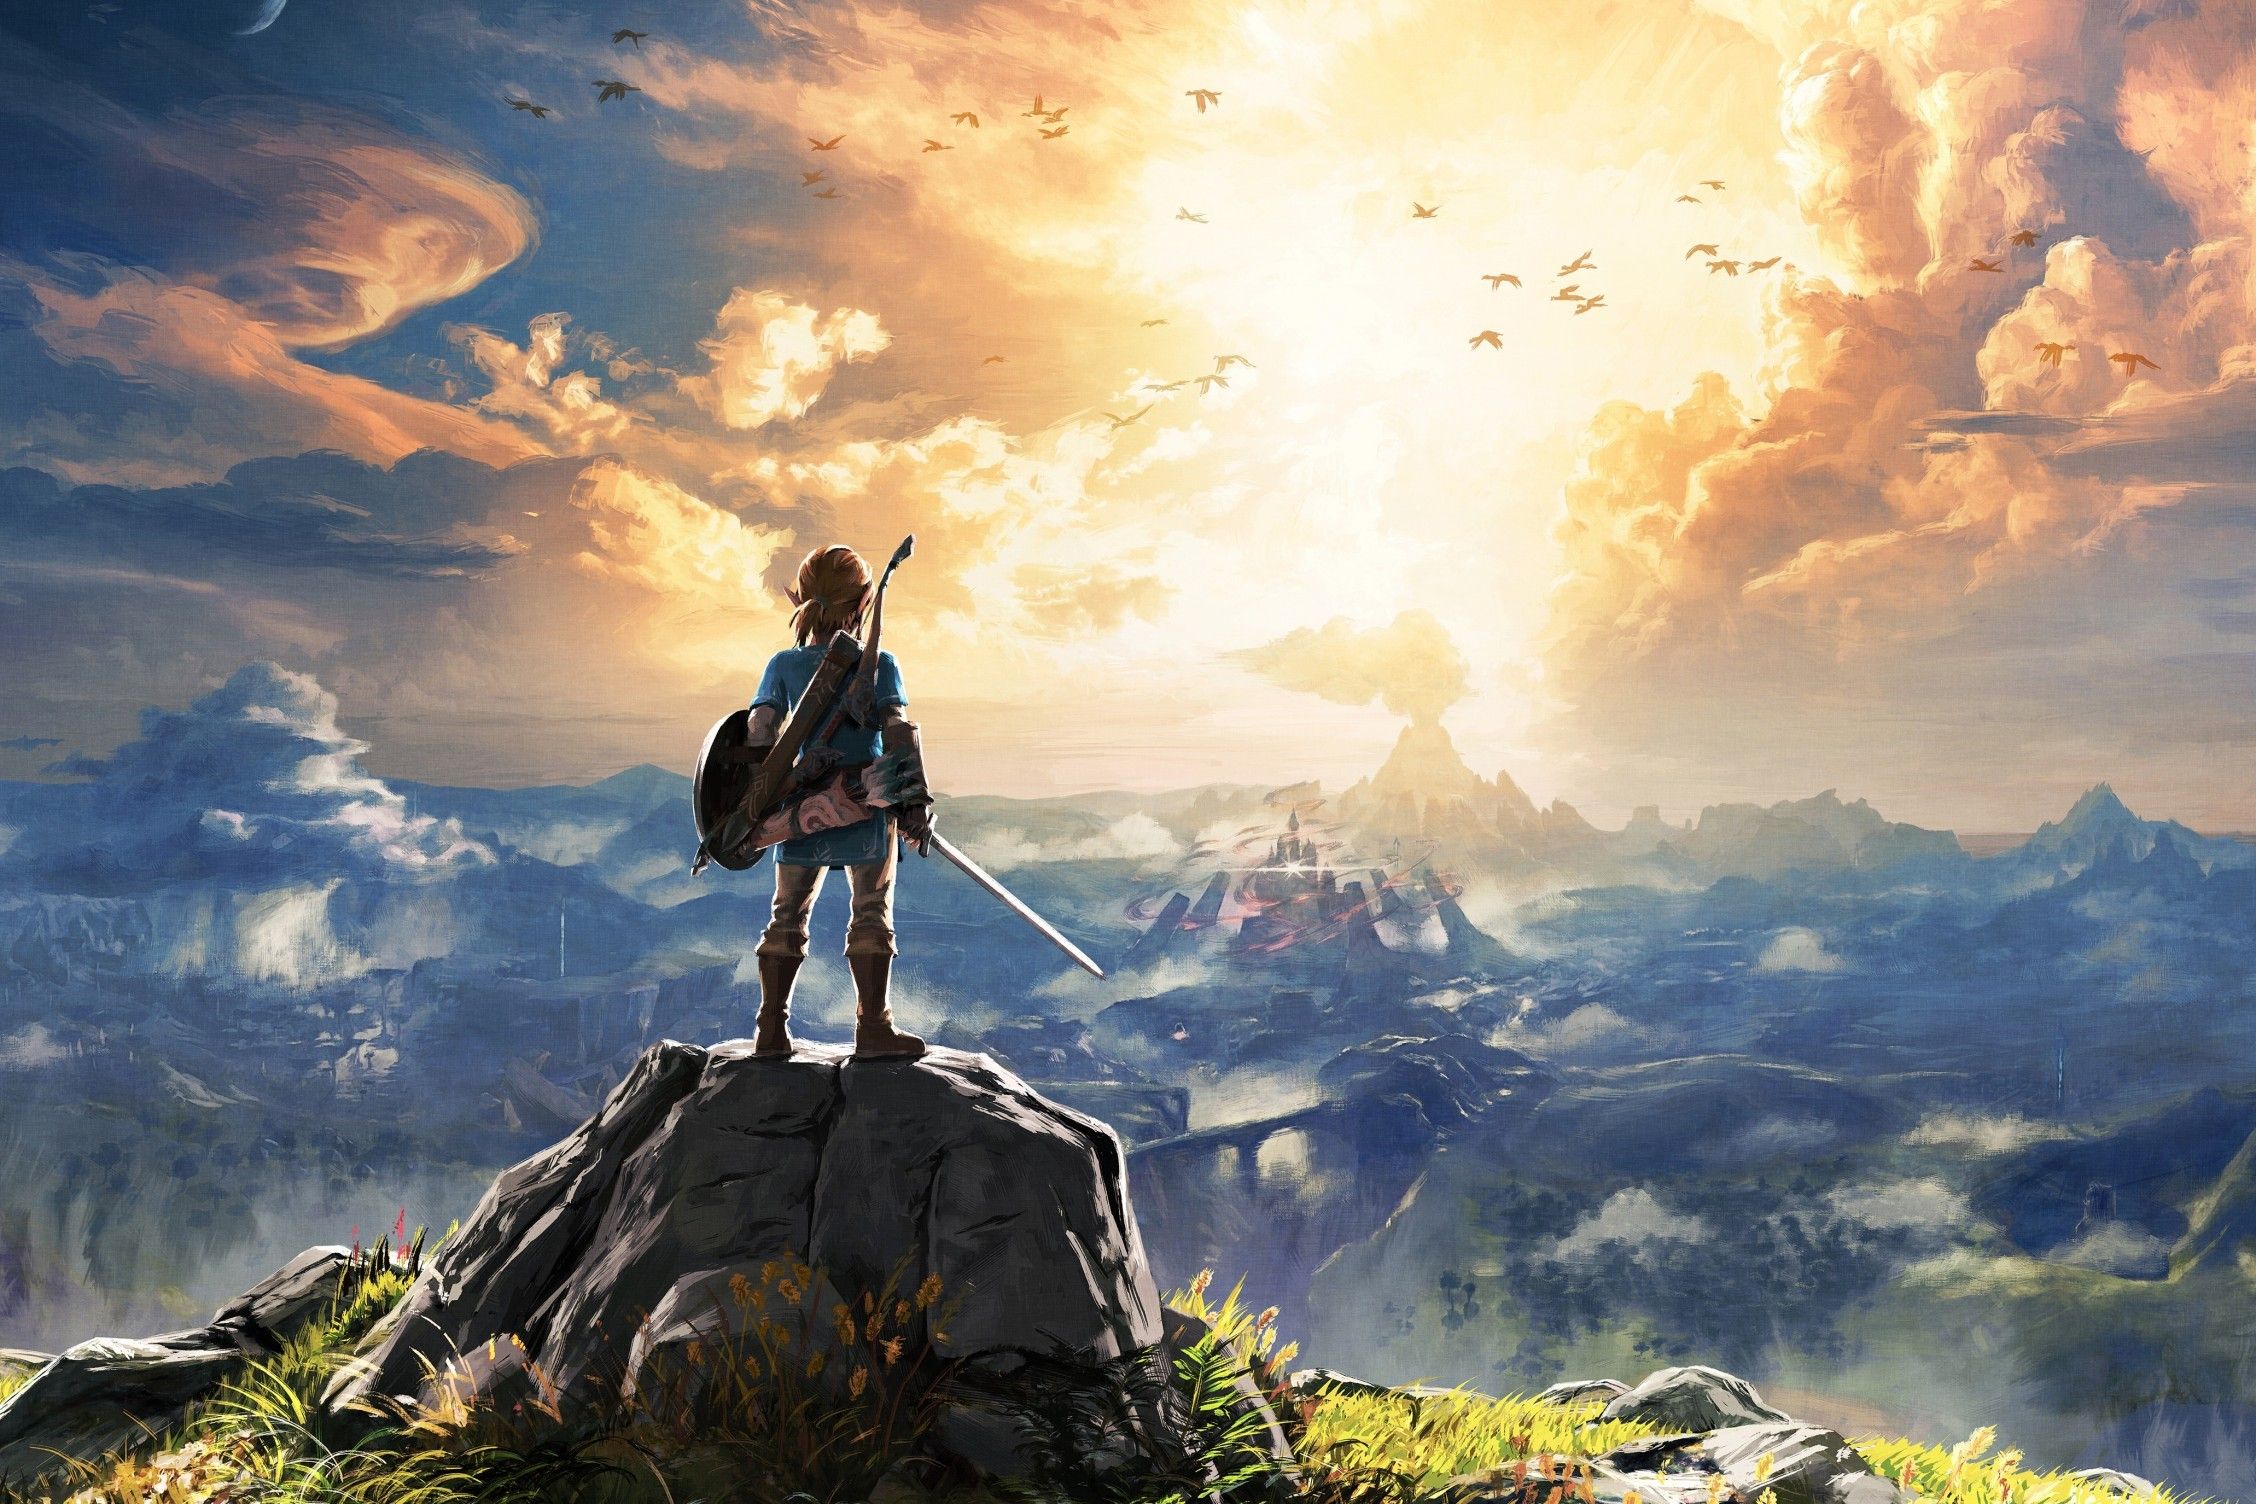 Download 2256x1504 The Legend Of Zelda: Breath Of The Wild, Link, Landscape, Sky, Scenic Wallpaper